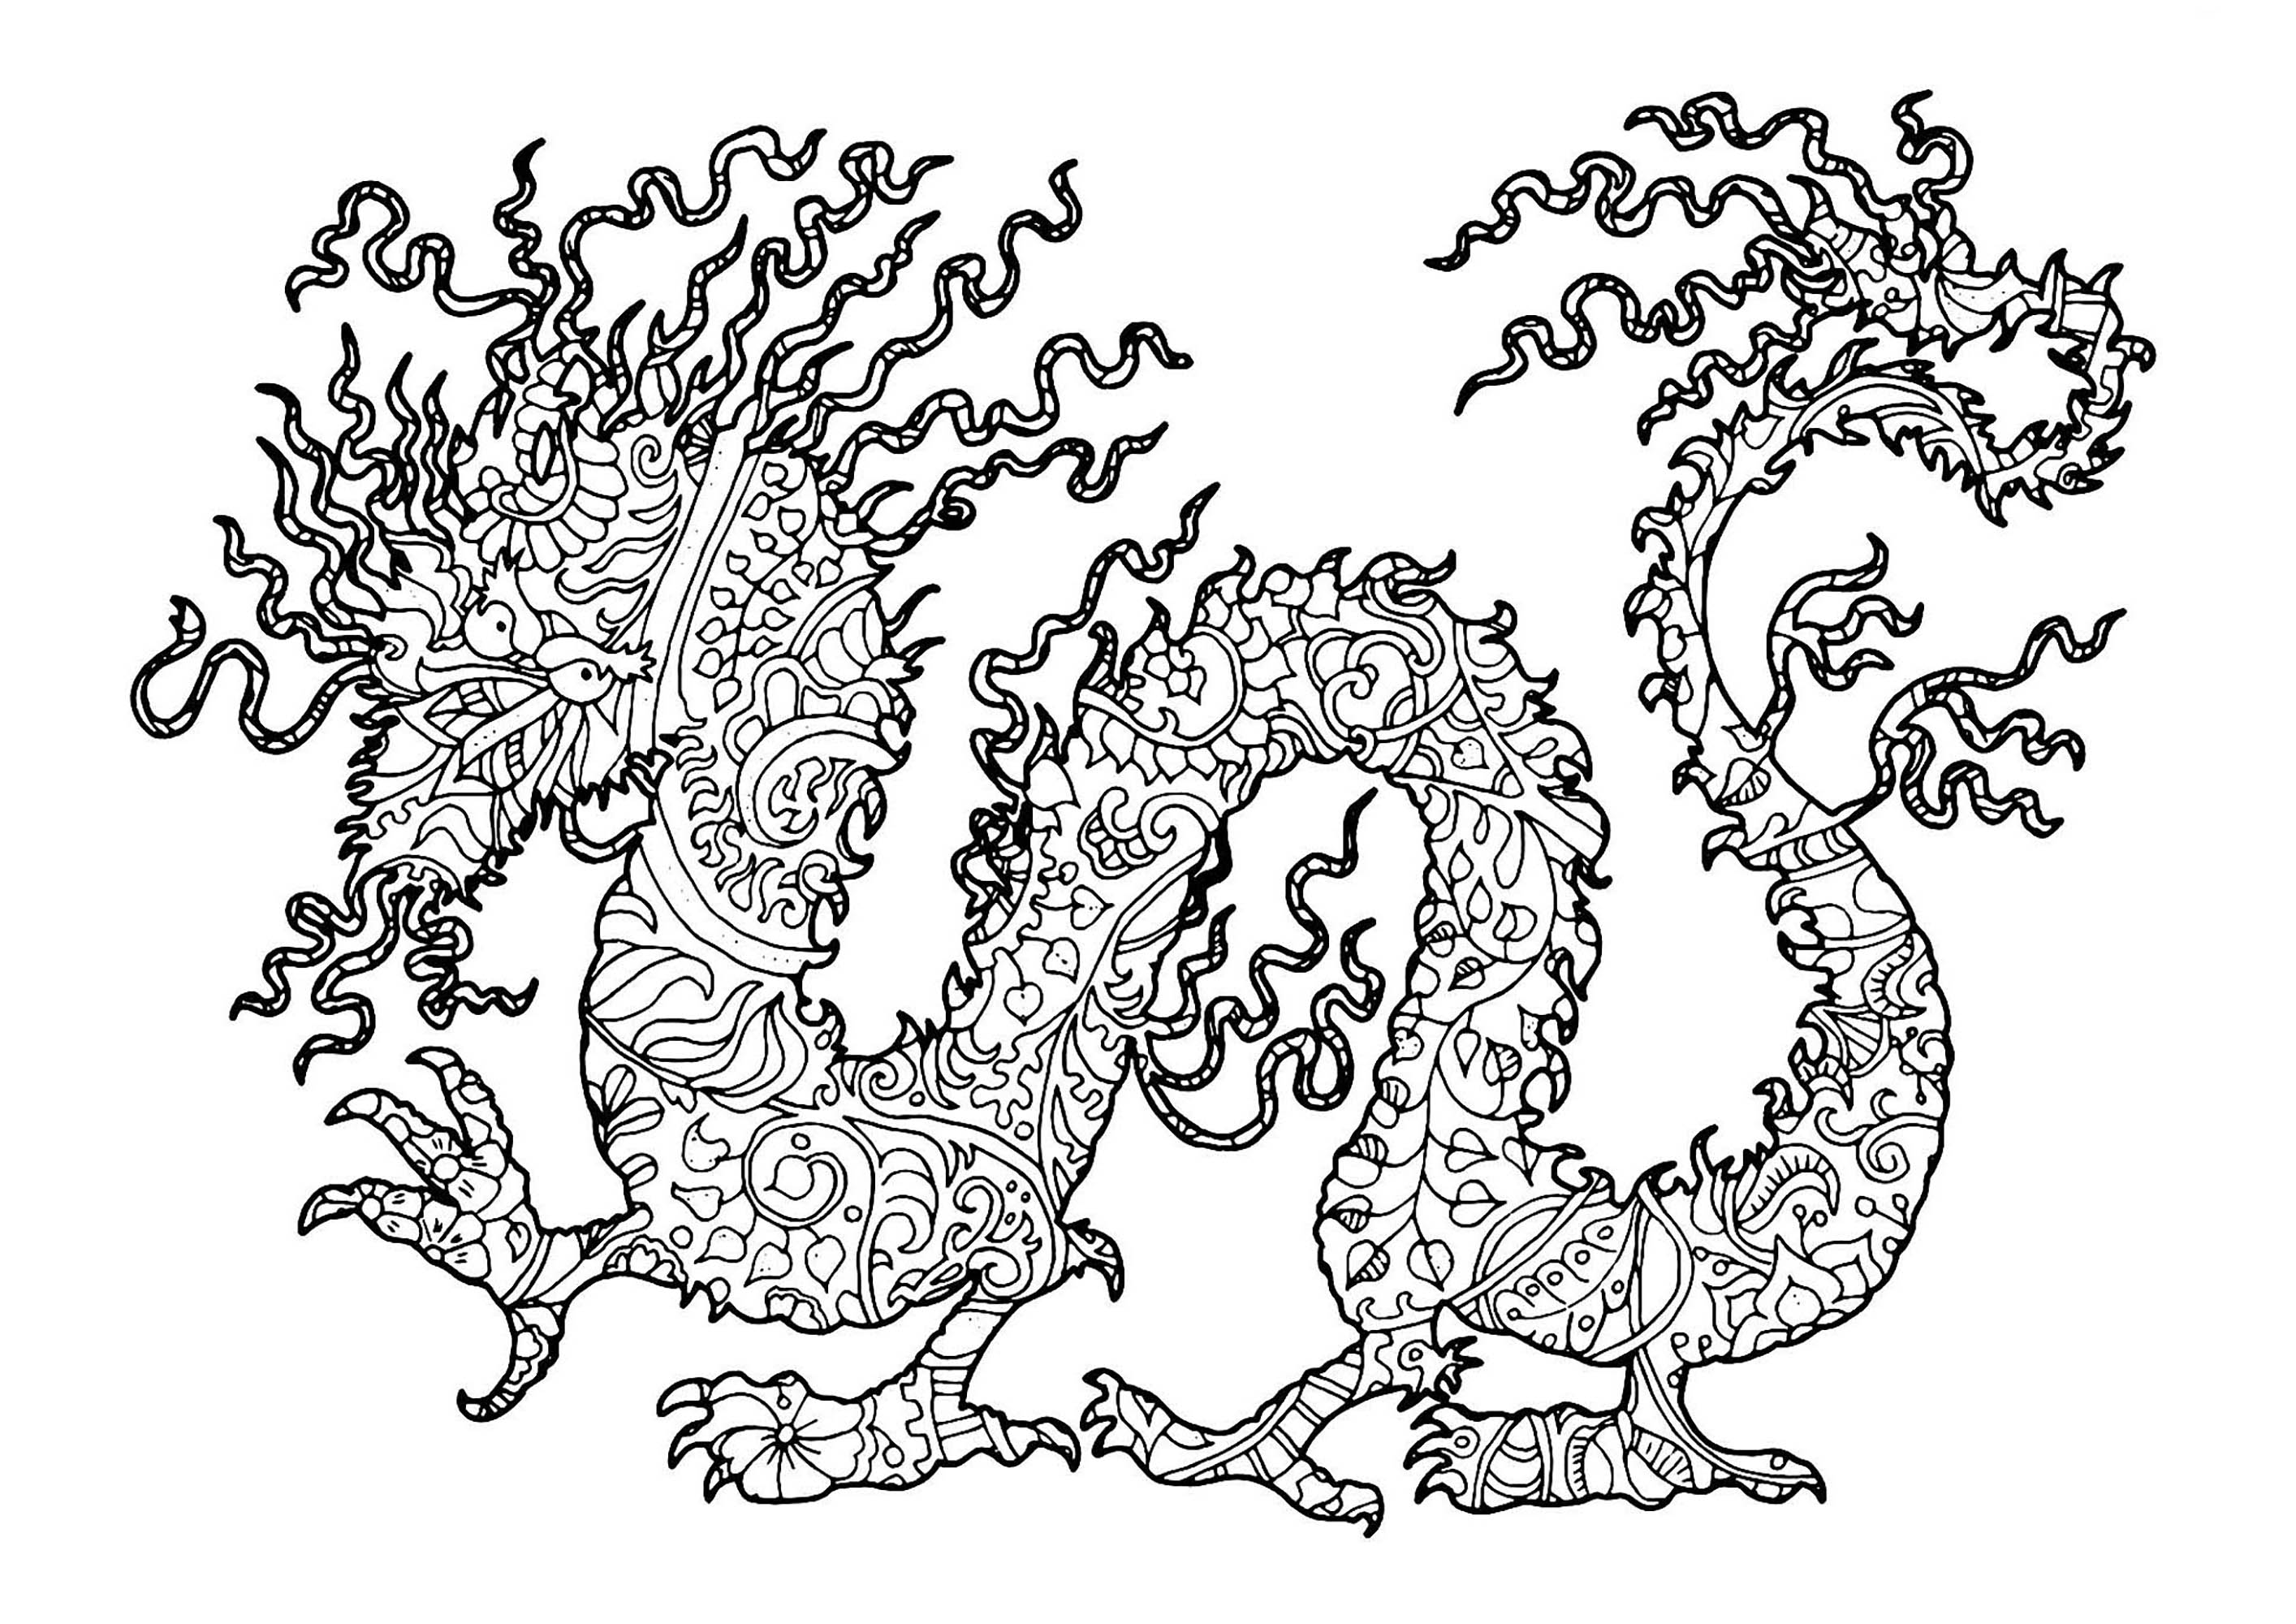 Full dragon in a complex coloring page, Source : 123rf   Artist : Vera Petruk